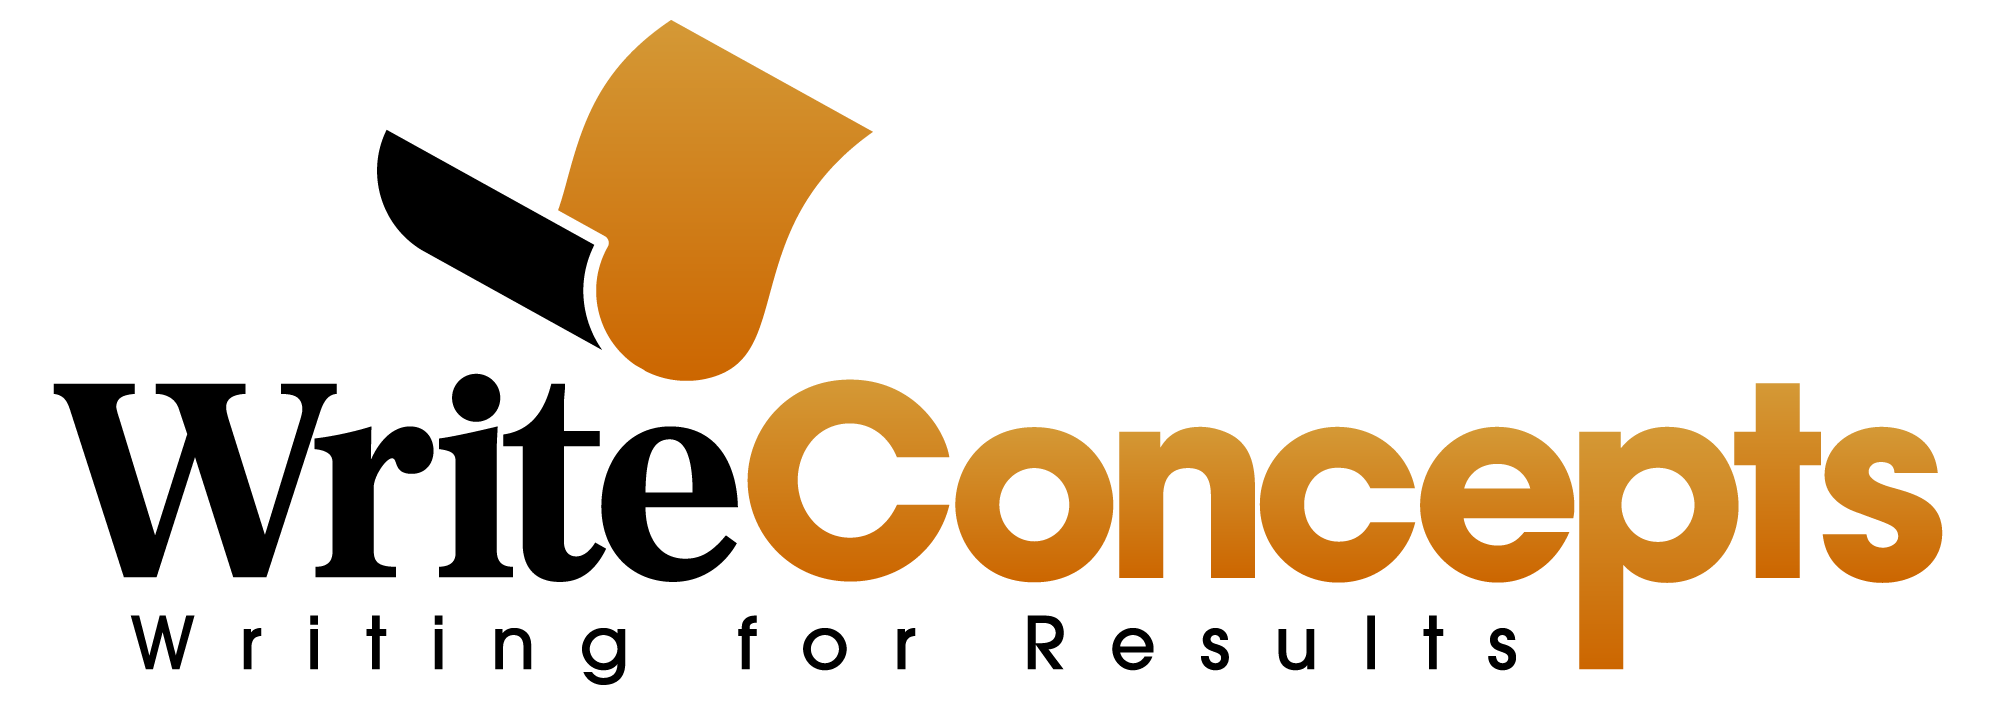 Concept Copywriting logo